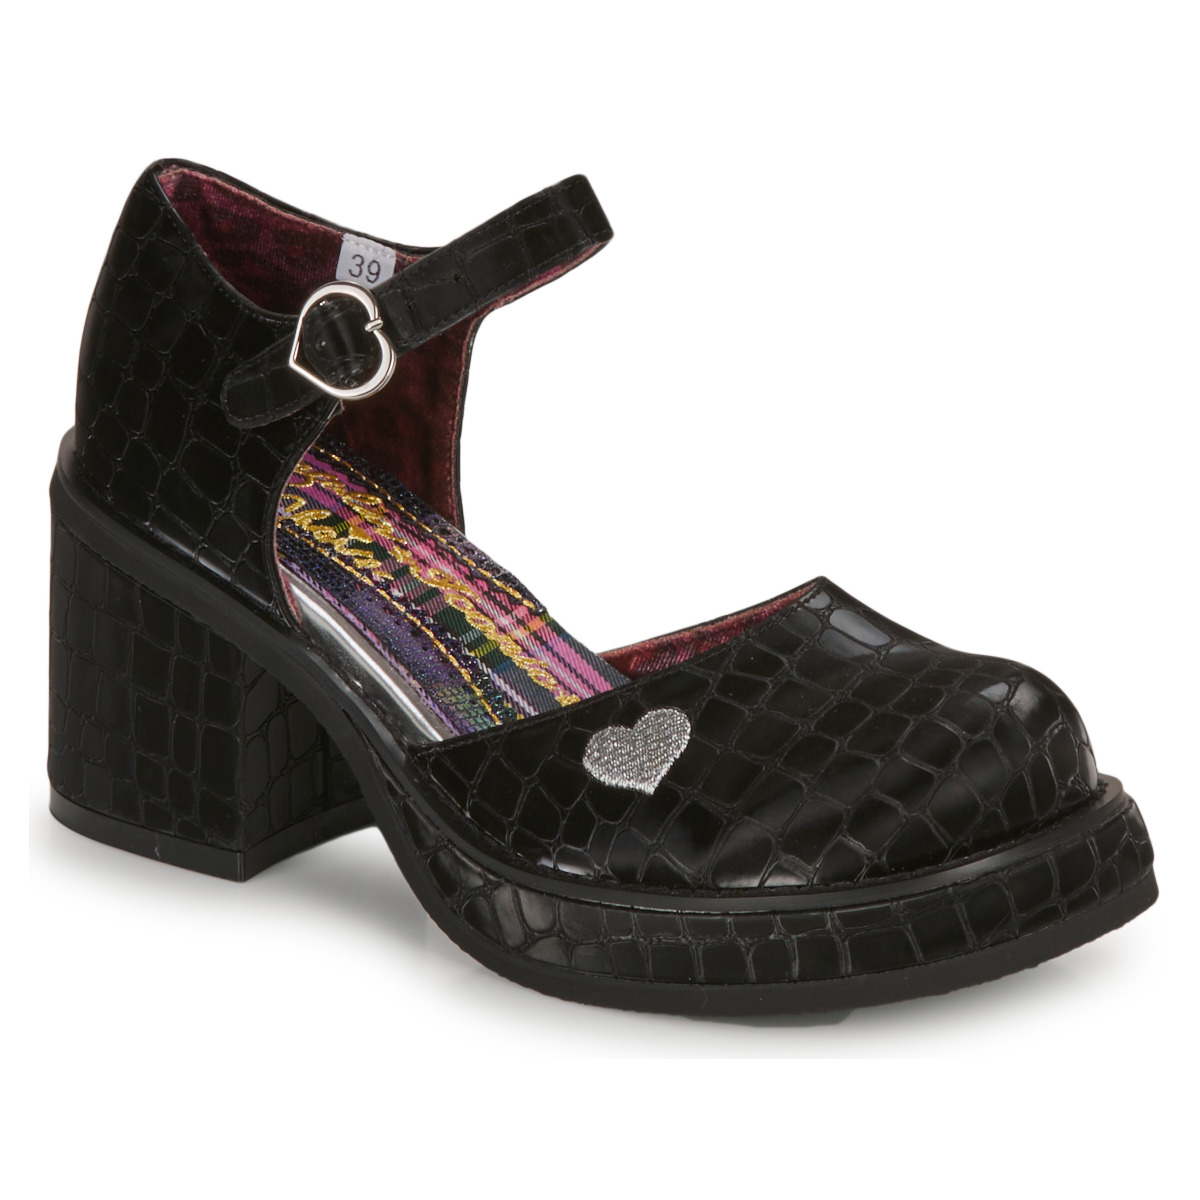 Zapatos Mujer Zapatos de tacón Irregular Choice NIGHT FEVER Negro